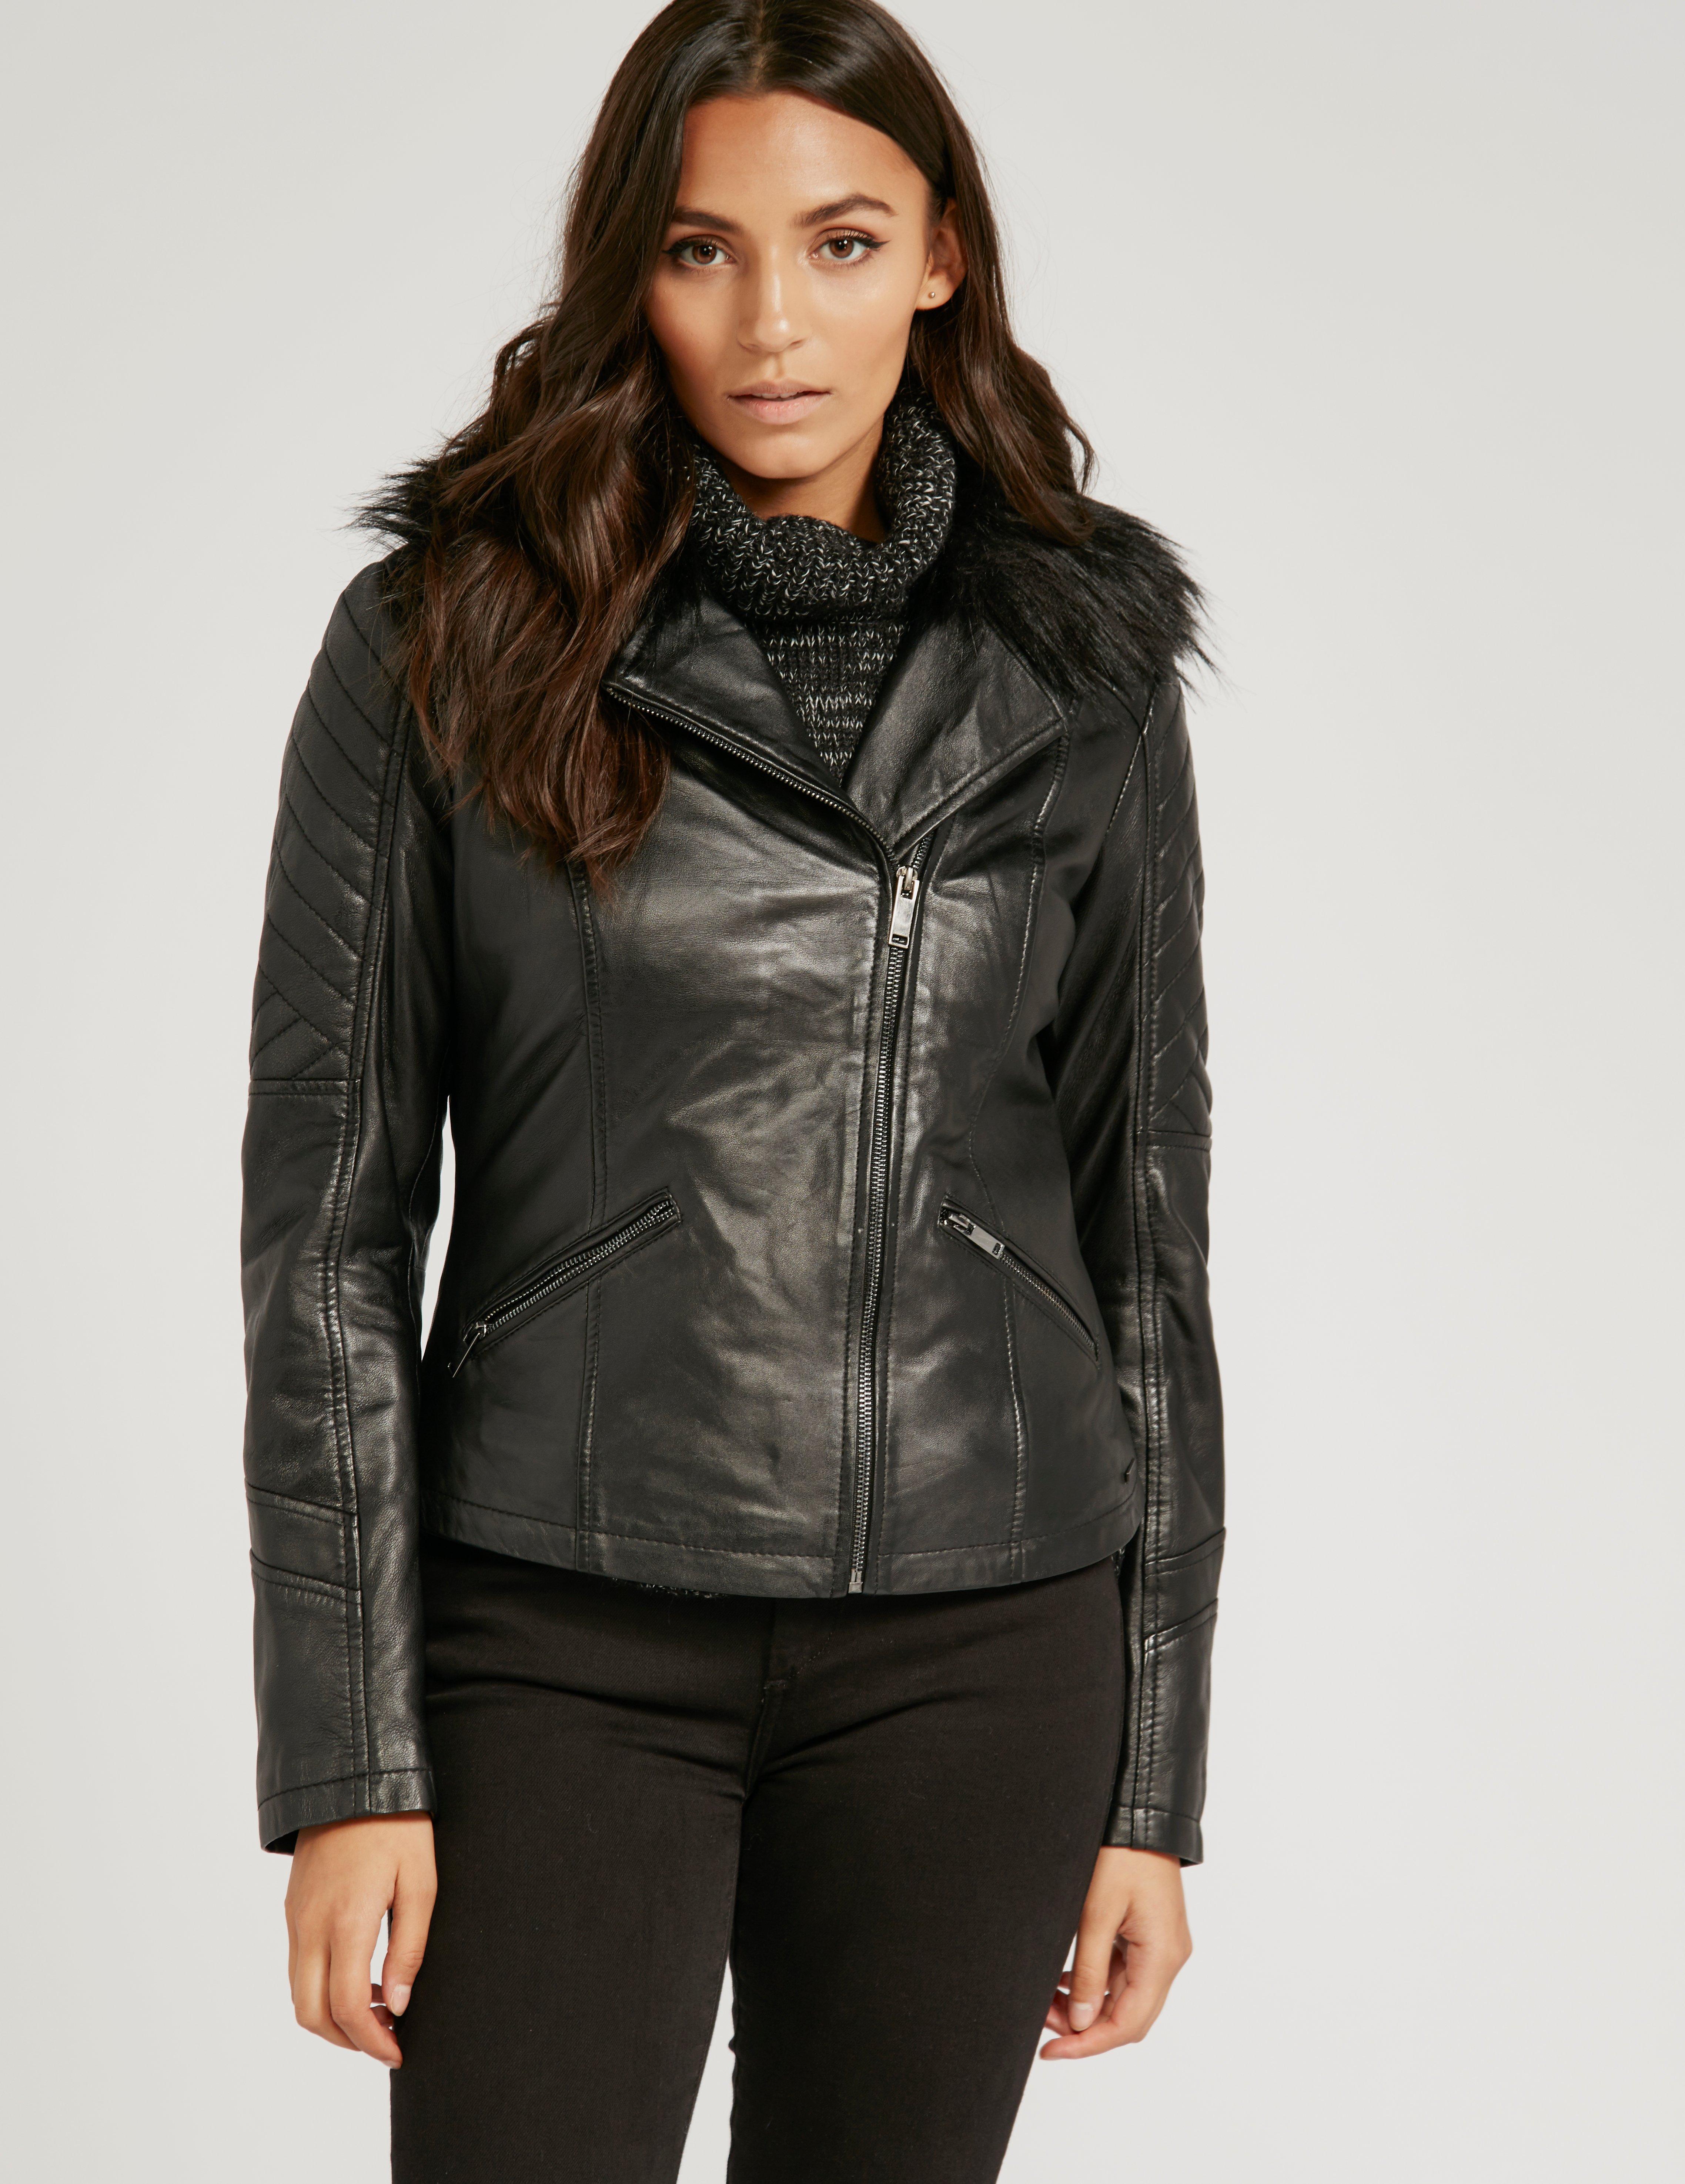 Rino & Pelle Leather Jacket in Black - Lyst